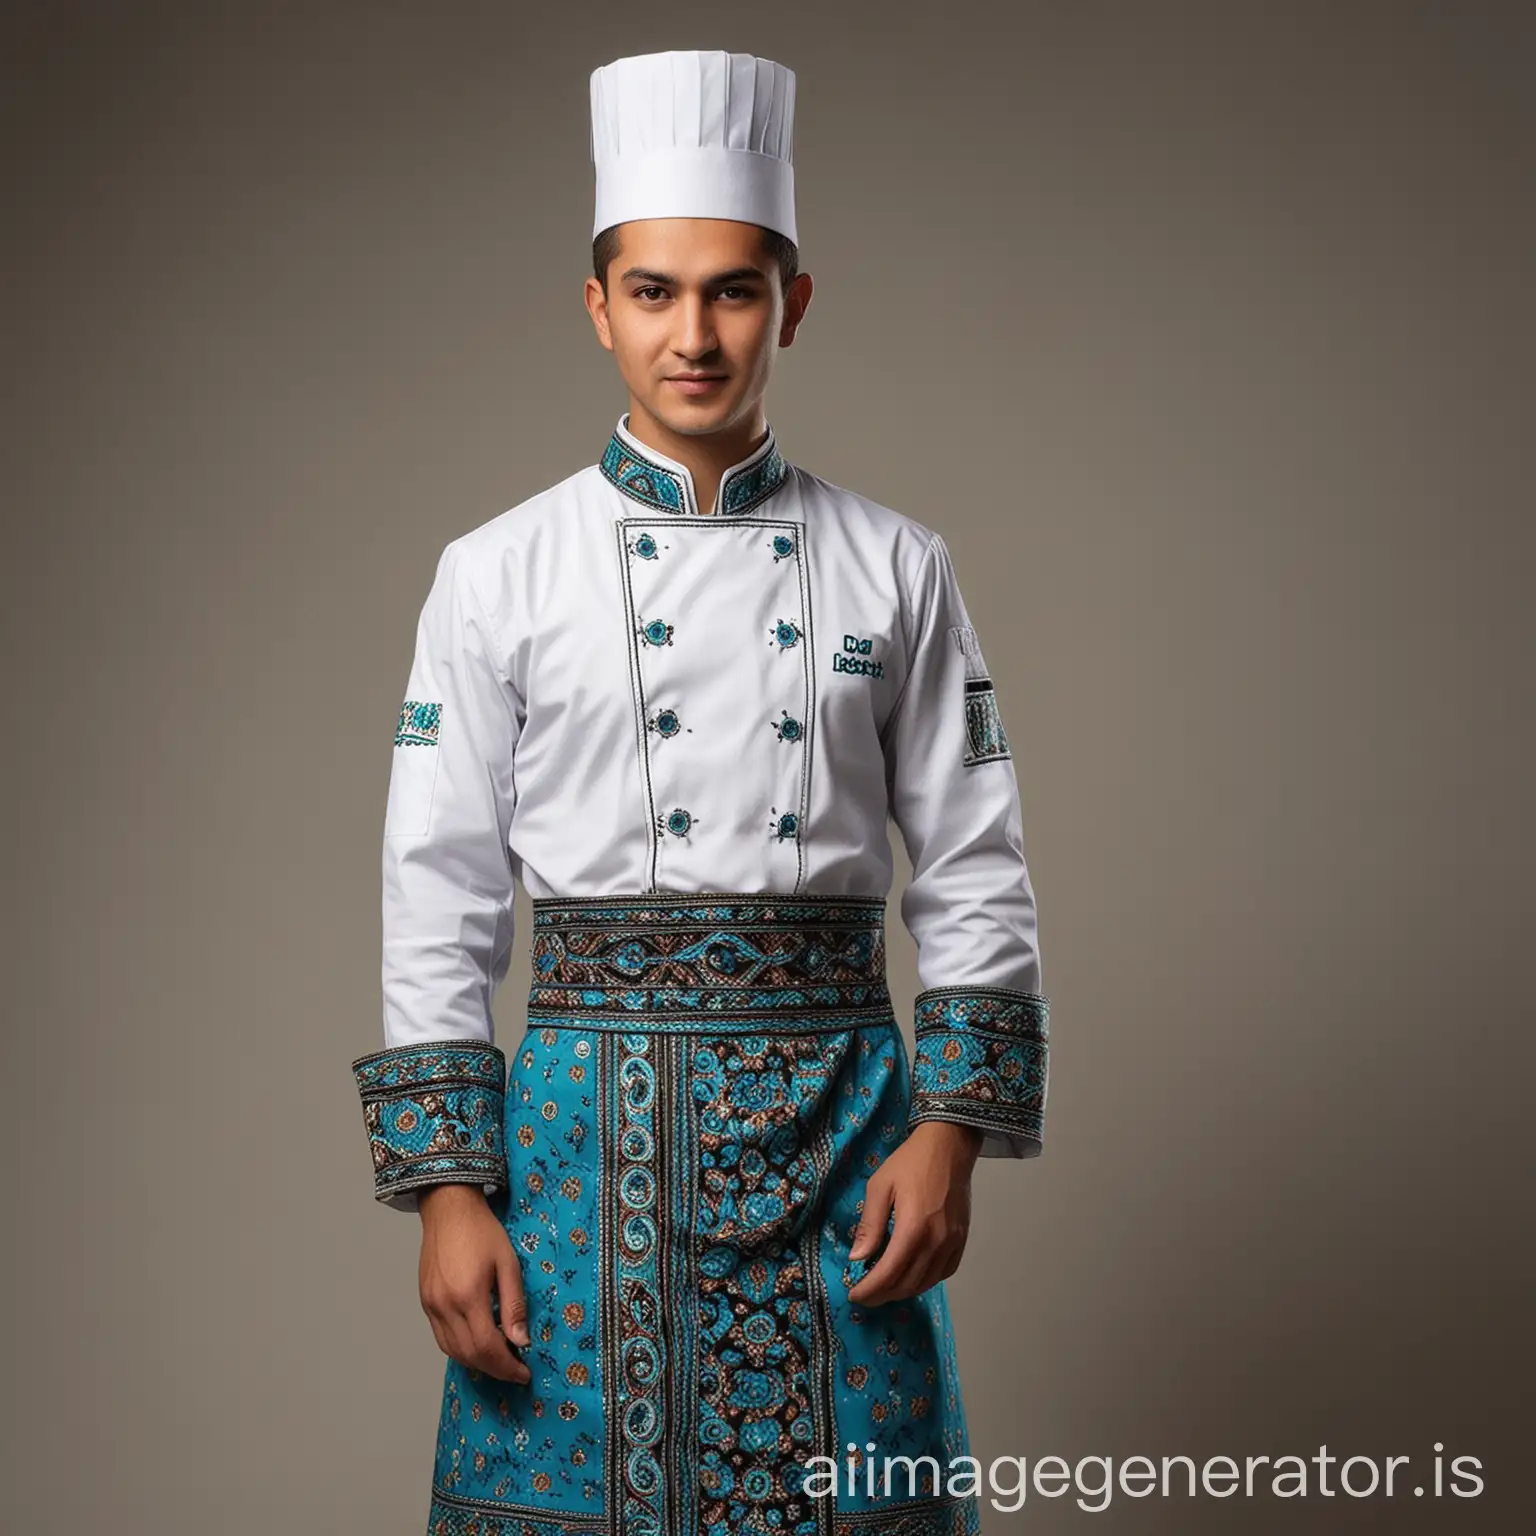 Create chef uniform for Doppi Restaurant. make it look  Uzbek traditional and with Uzbek doppi